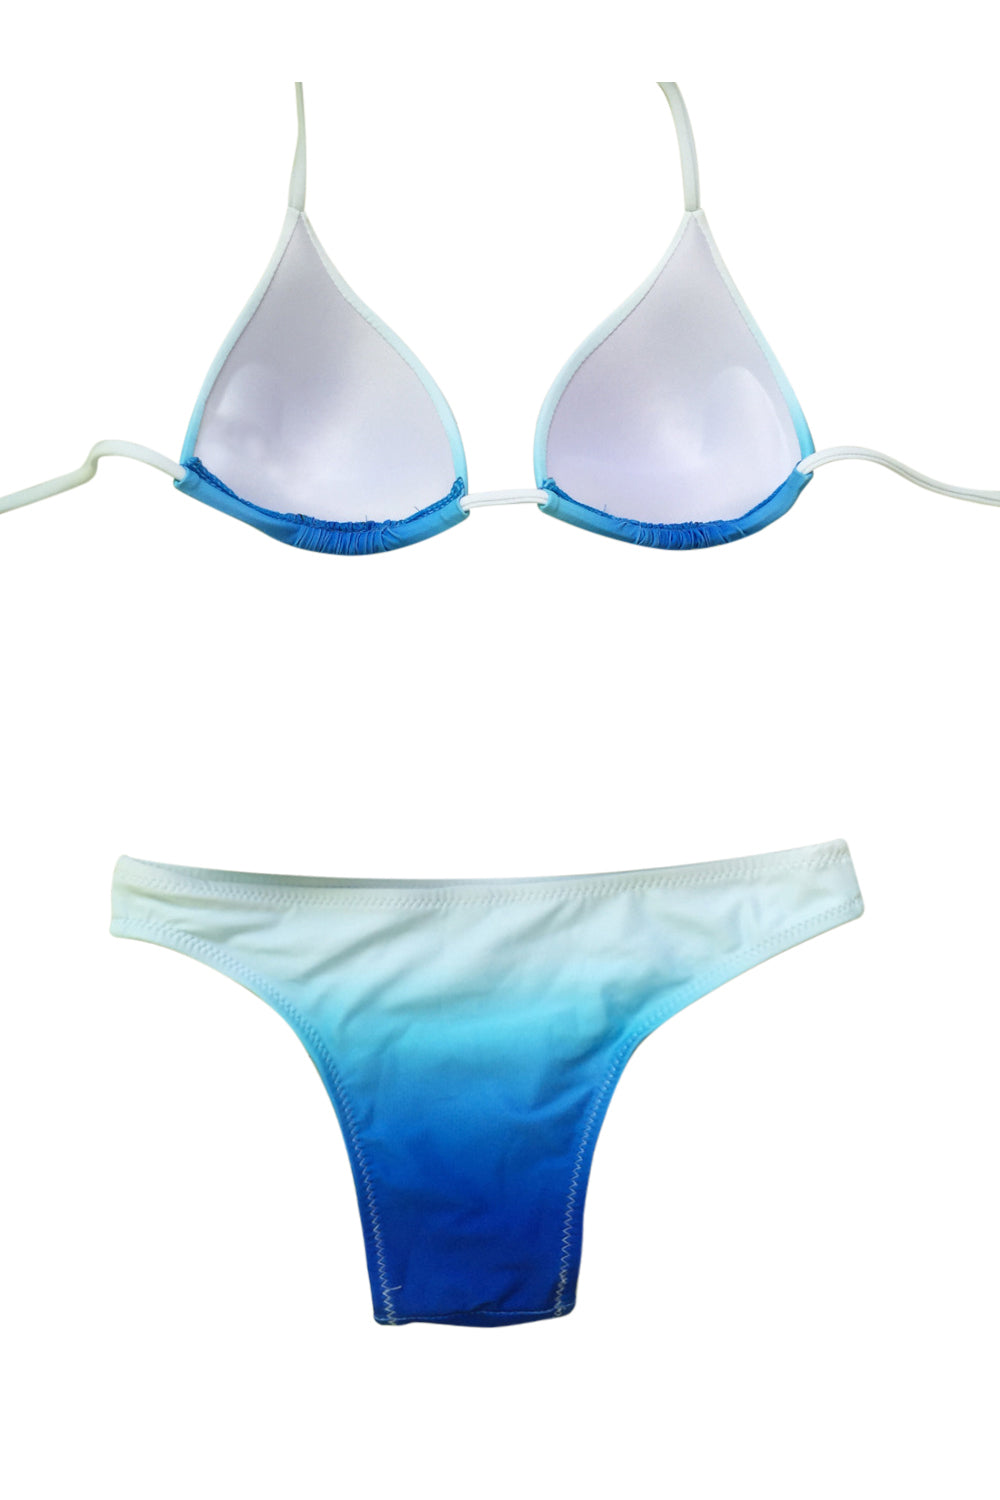 Iyasson Sky Blue Triangle Top Bikini Swimwear